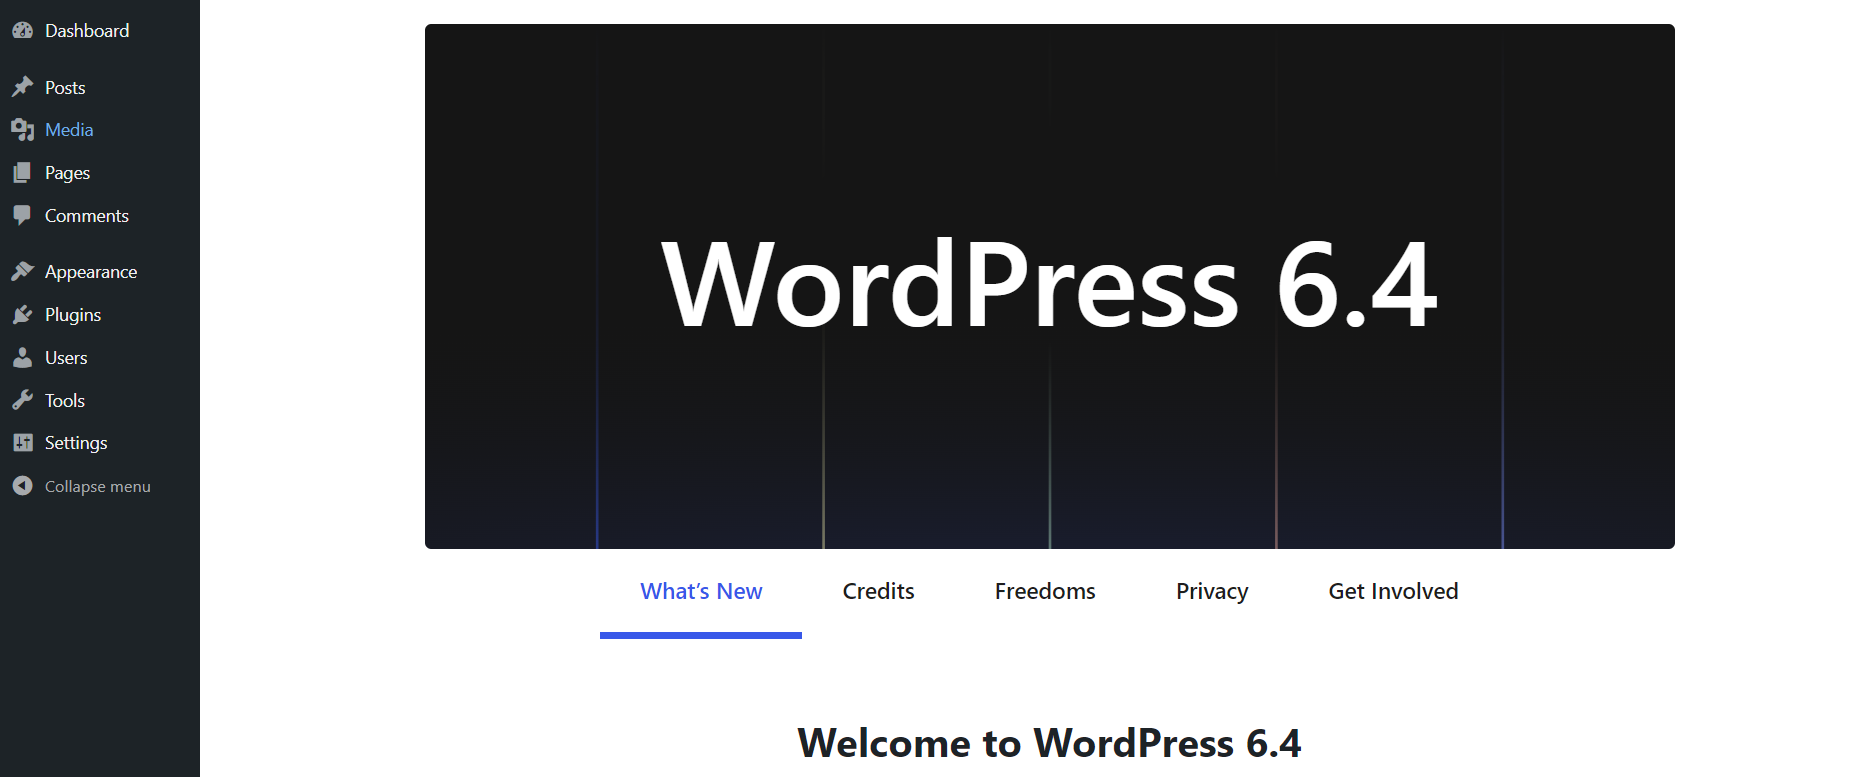 How Can I Test WordPress 6.4